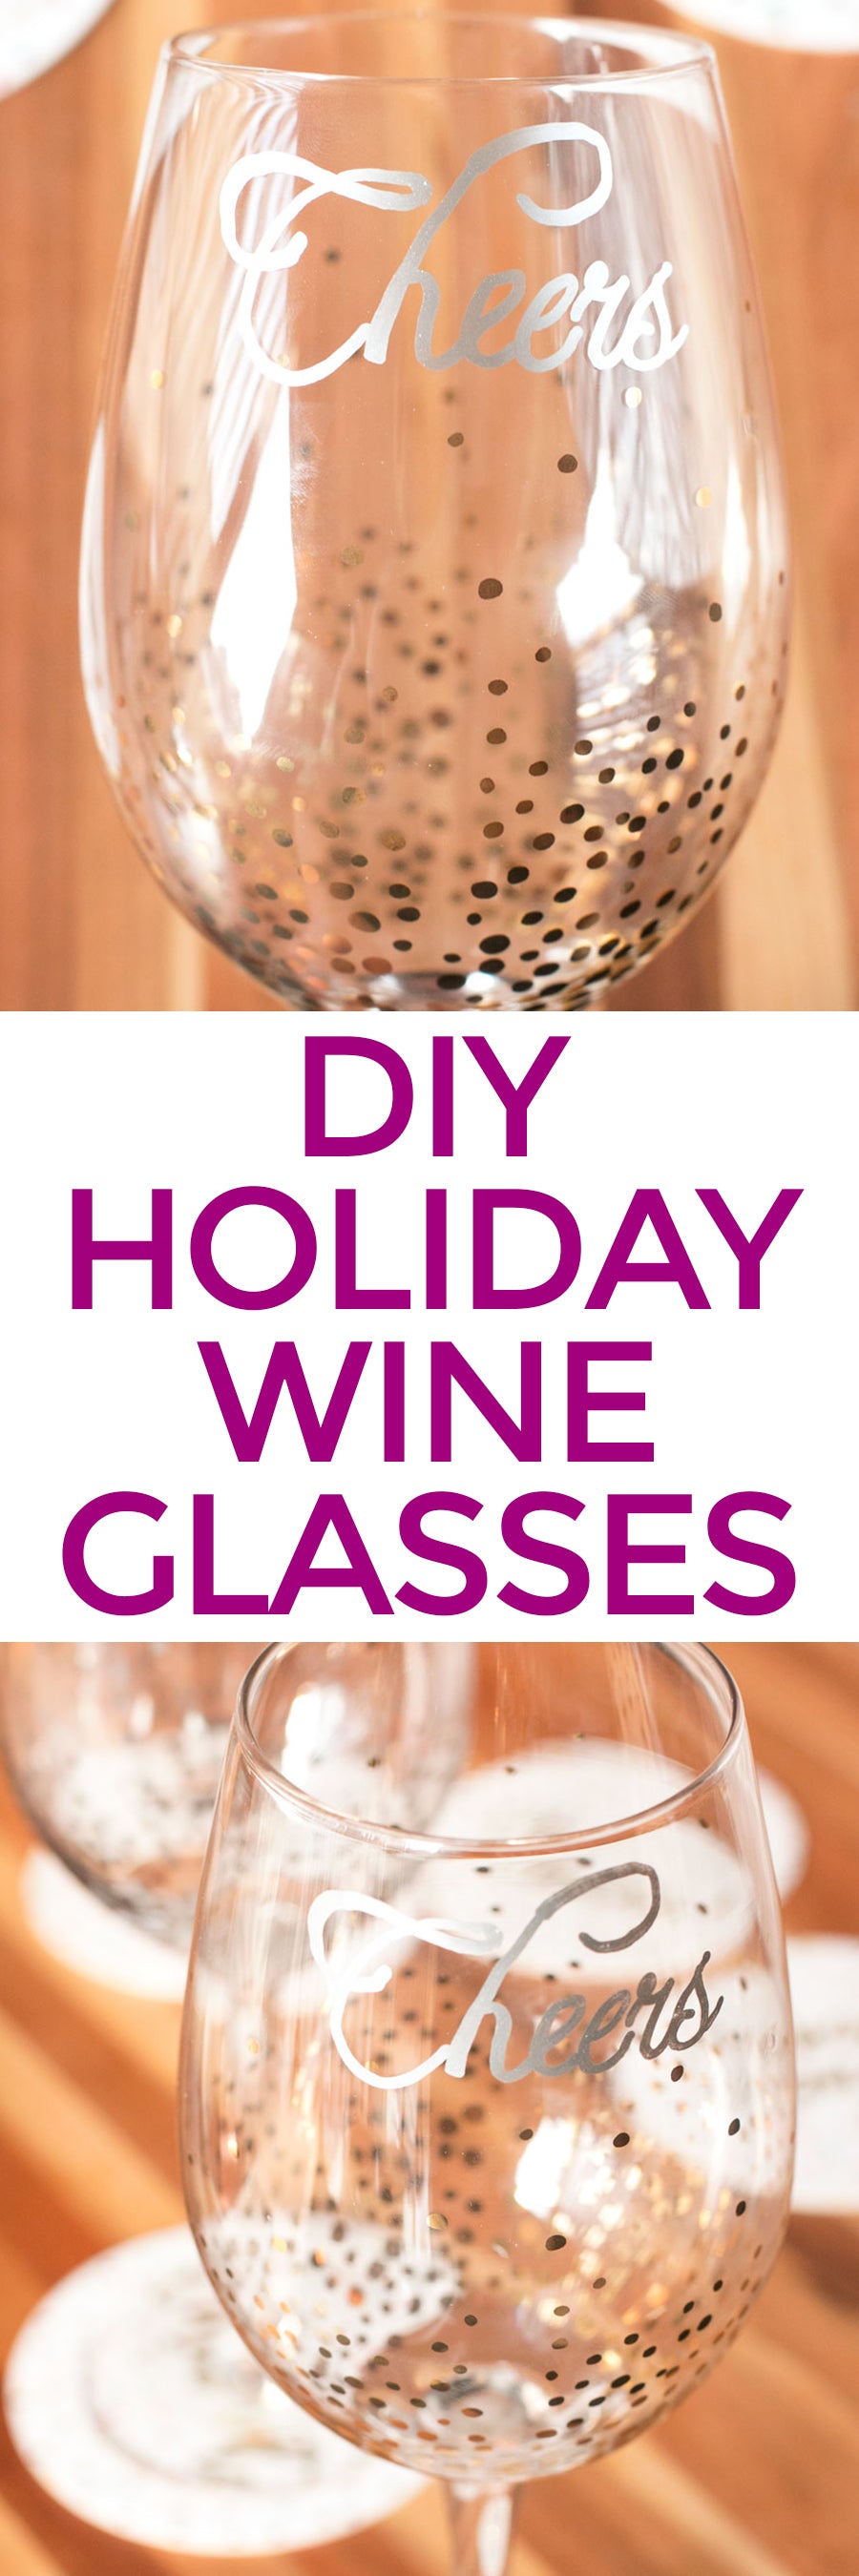 DIY Holiday Wine Glasses | pigofthemonth.com #wineglasses #christmas #holiday